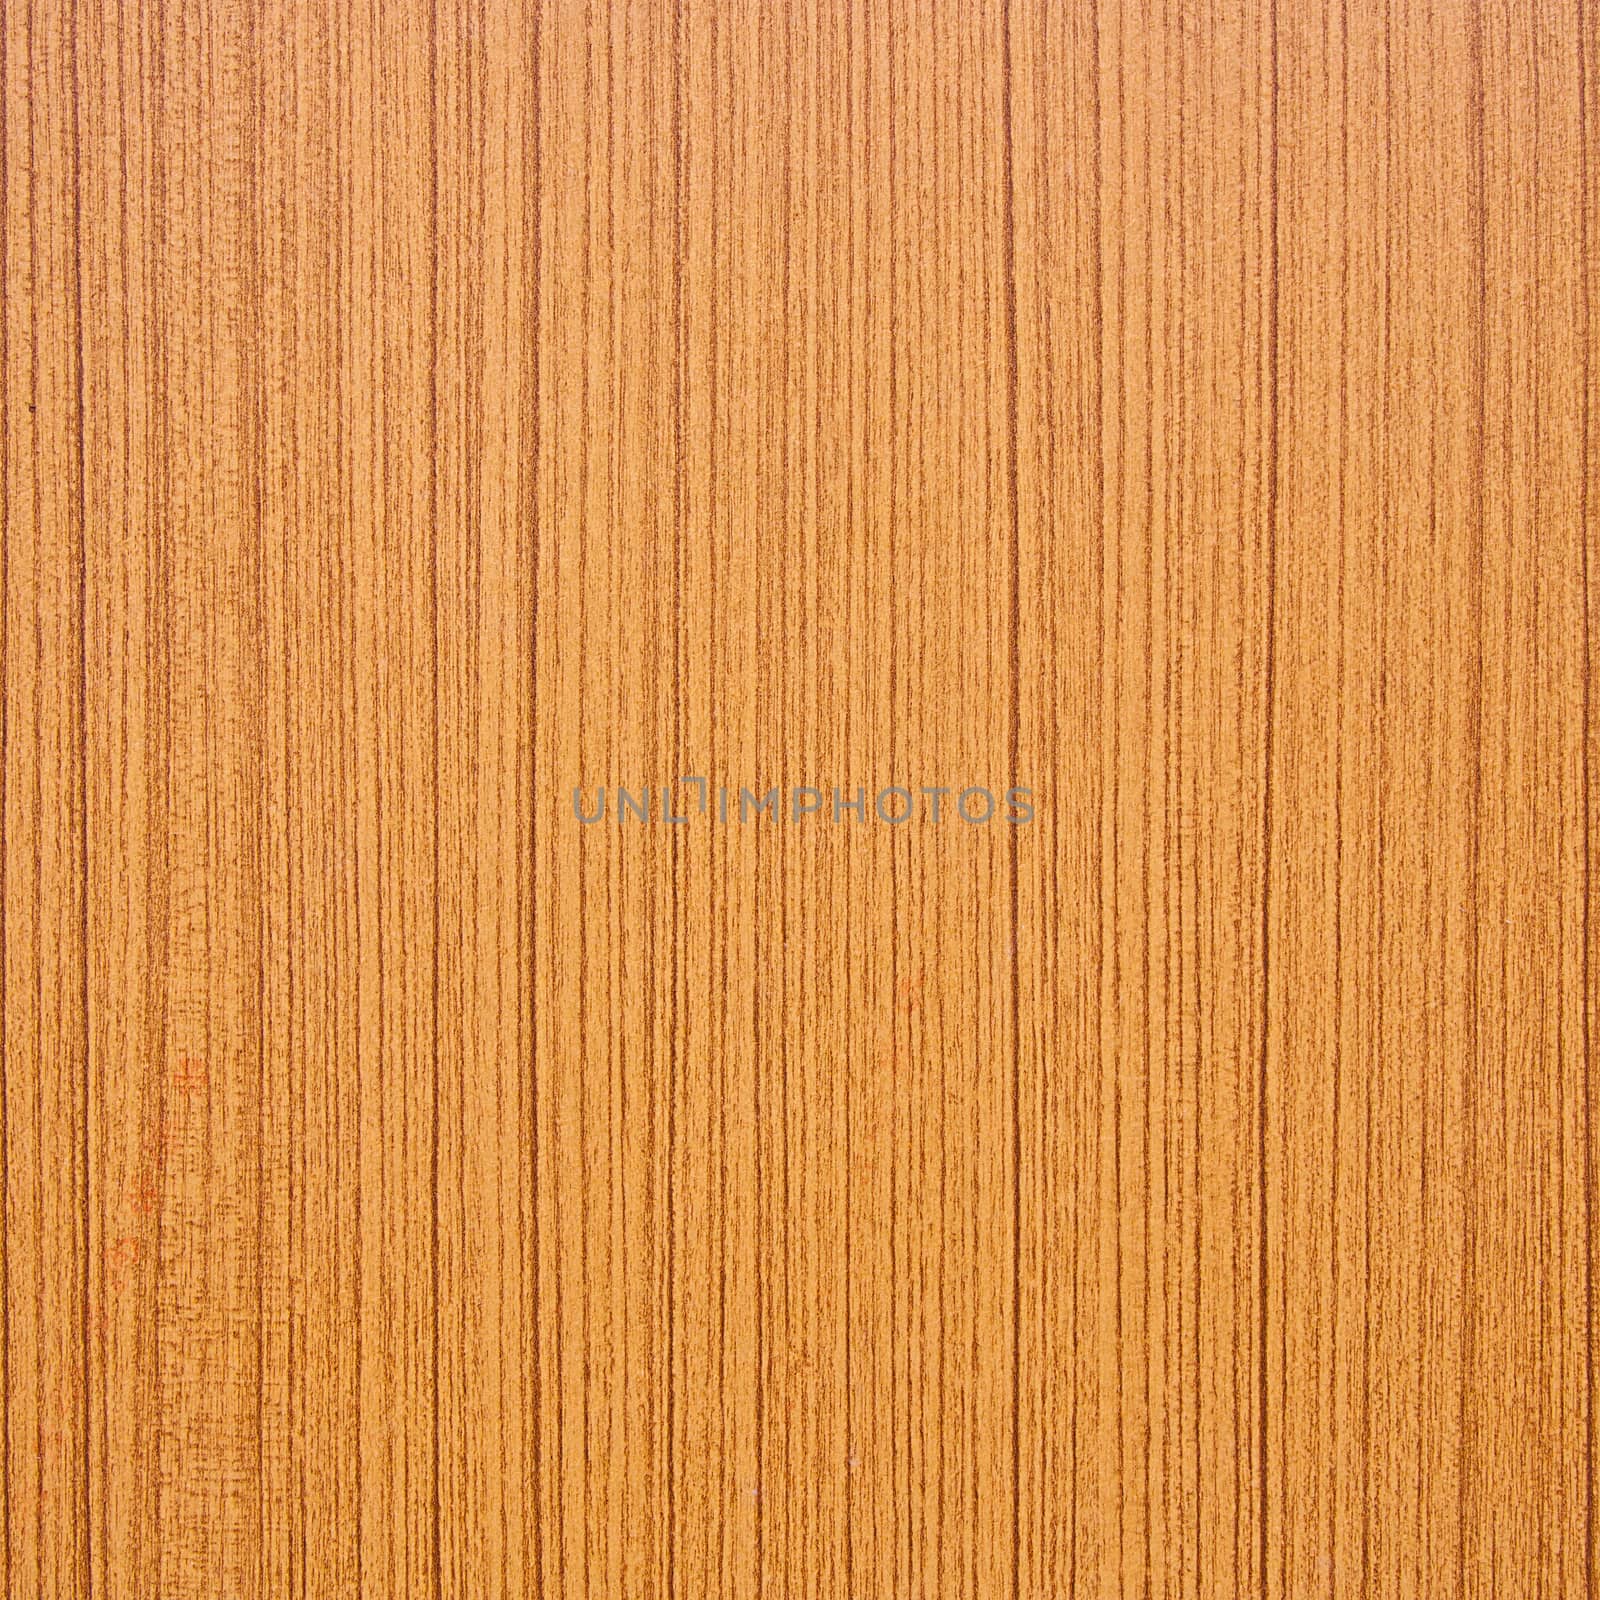 Wood texture by wyoosumran